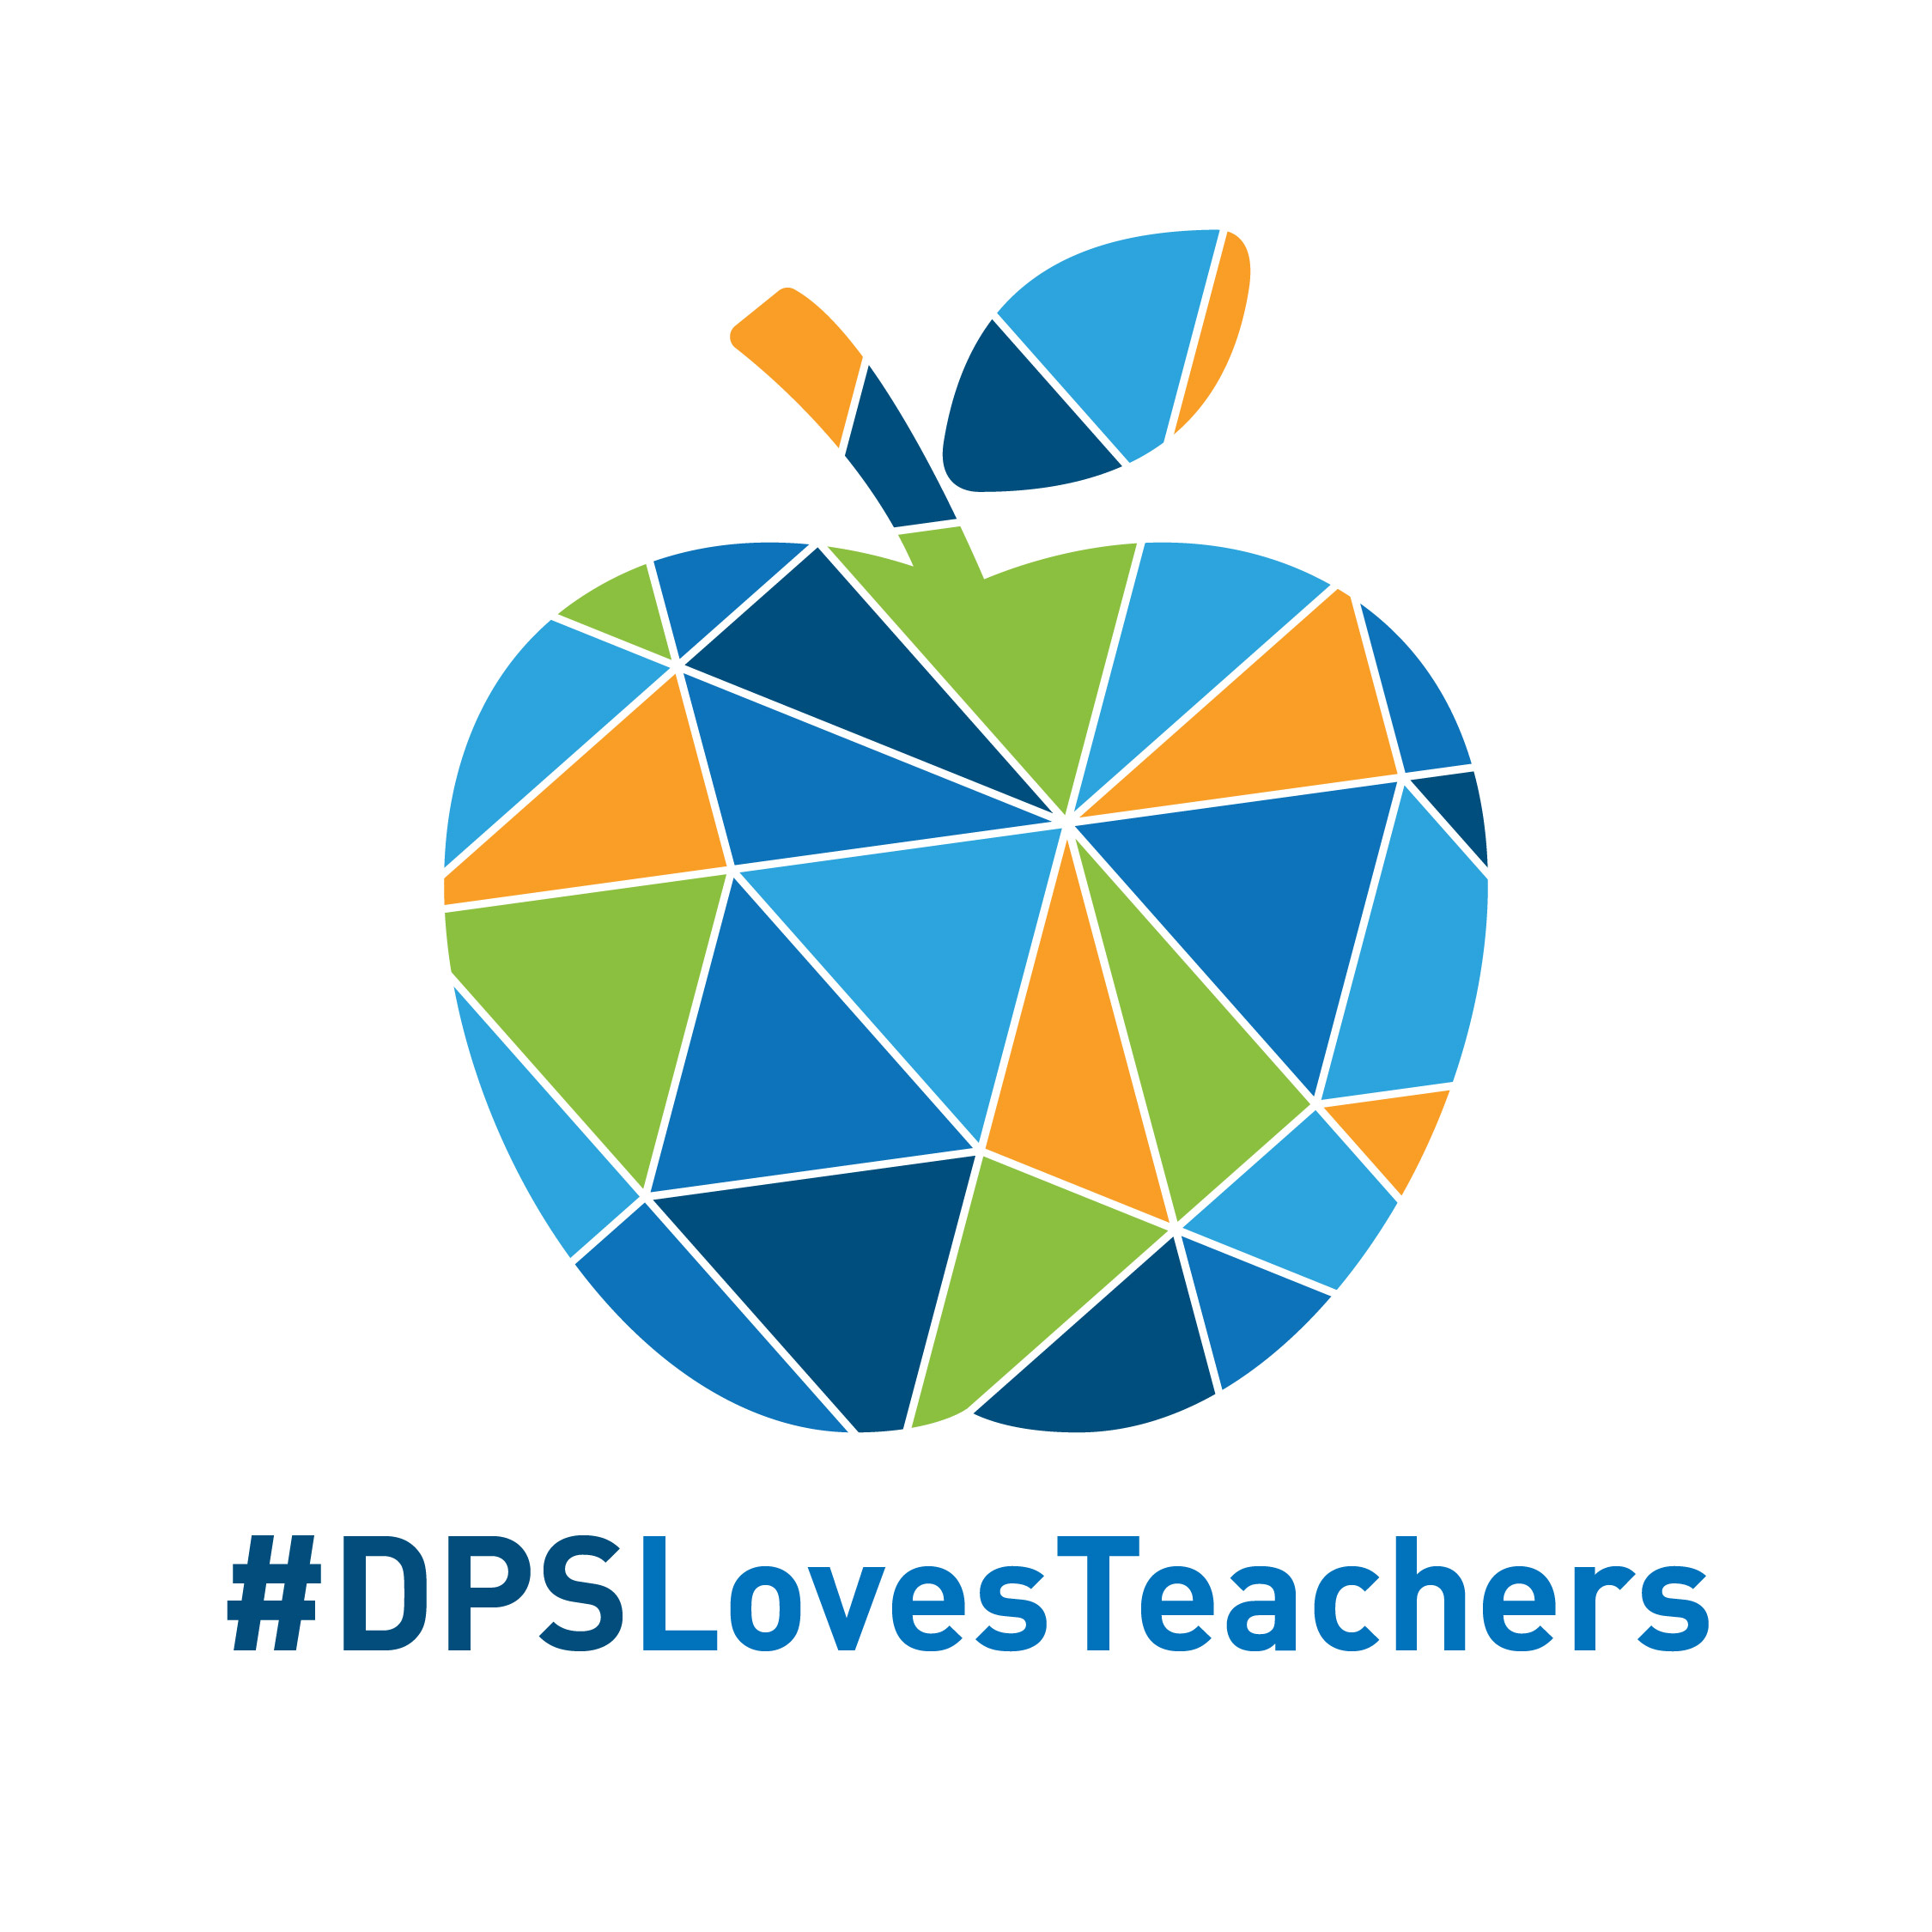 #DPSLovesTeachers with apple graphic